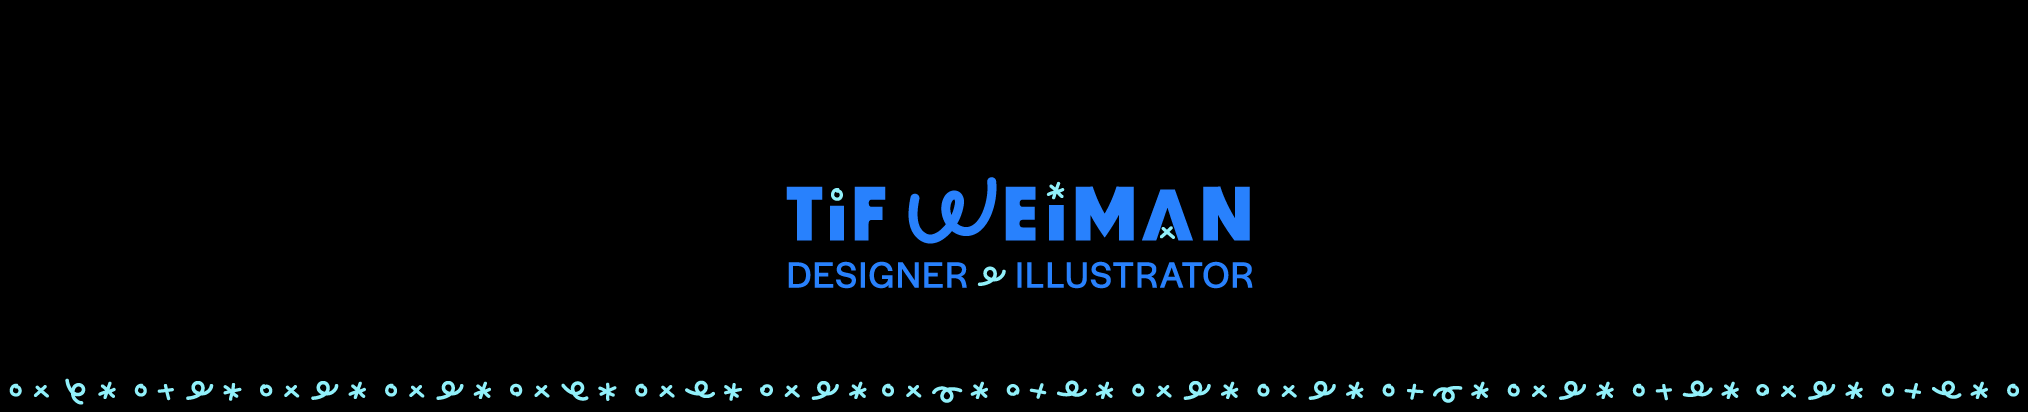 Tif Weiman のプロファイルバナー